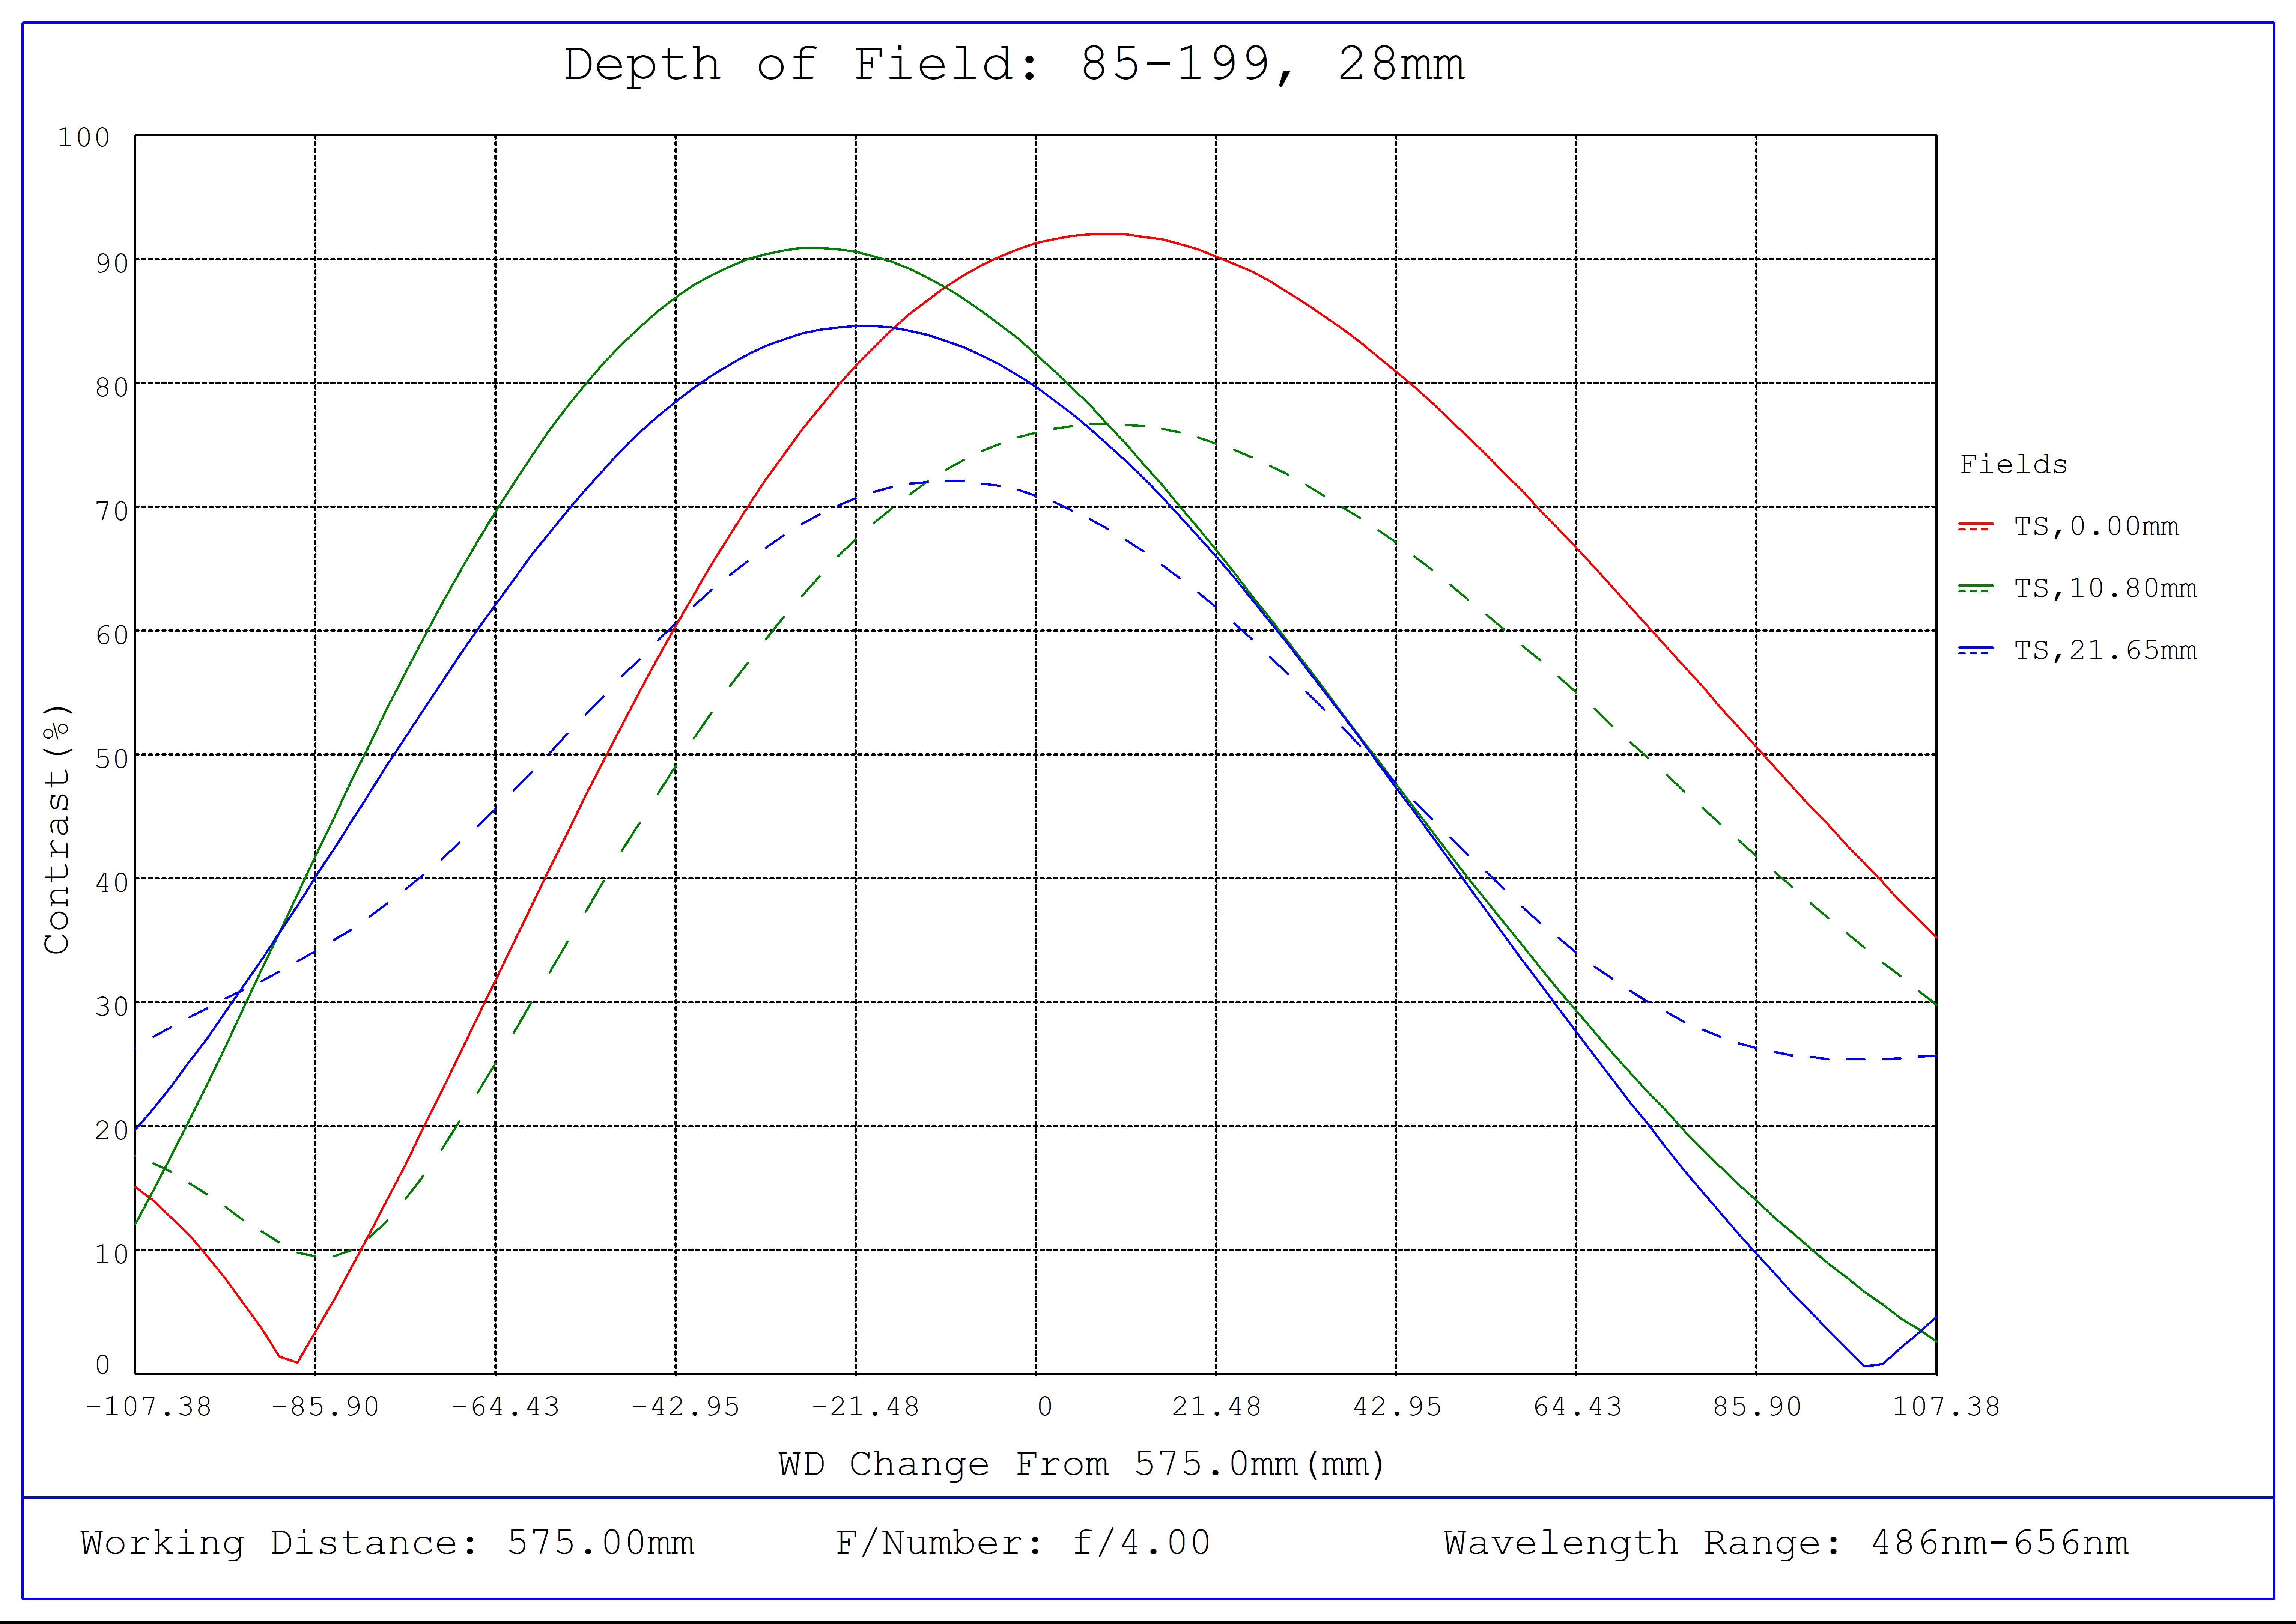 #85-199, 28mm Short Working Distance, LF Series Fixed Focal Length Lens, Depth of Field Plot, 575mm Working Distance, f4